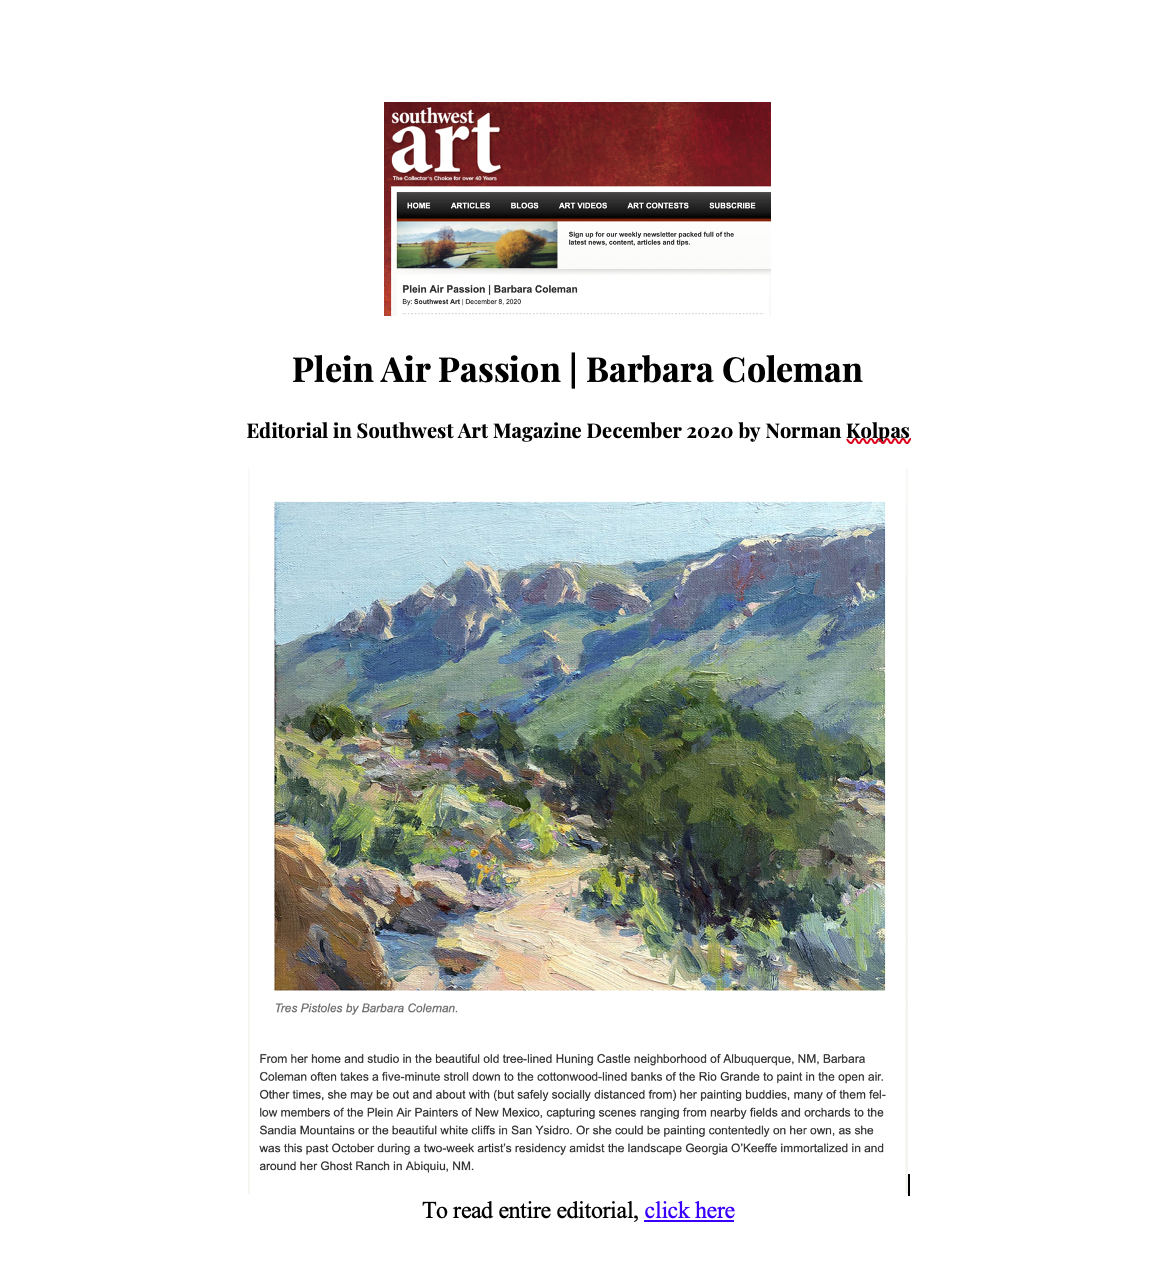 Southwest Art, Plein Air Passion Editorial, December 2020